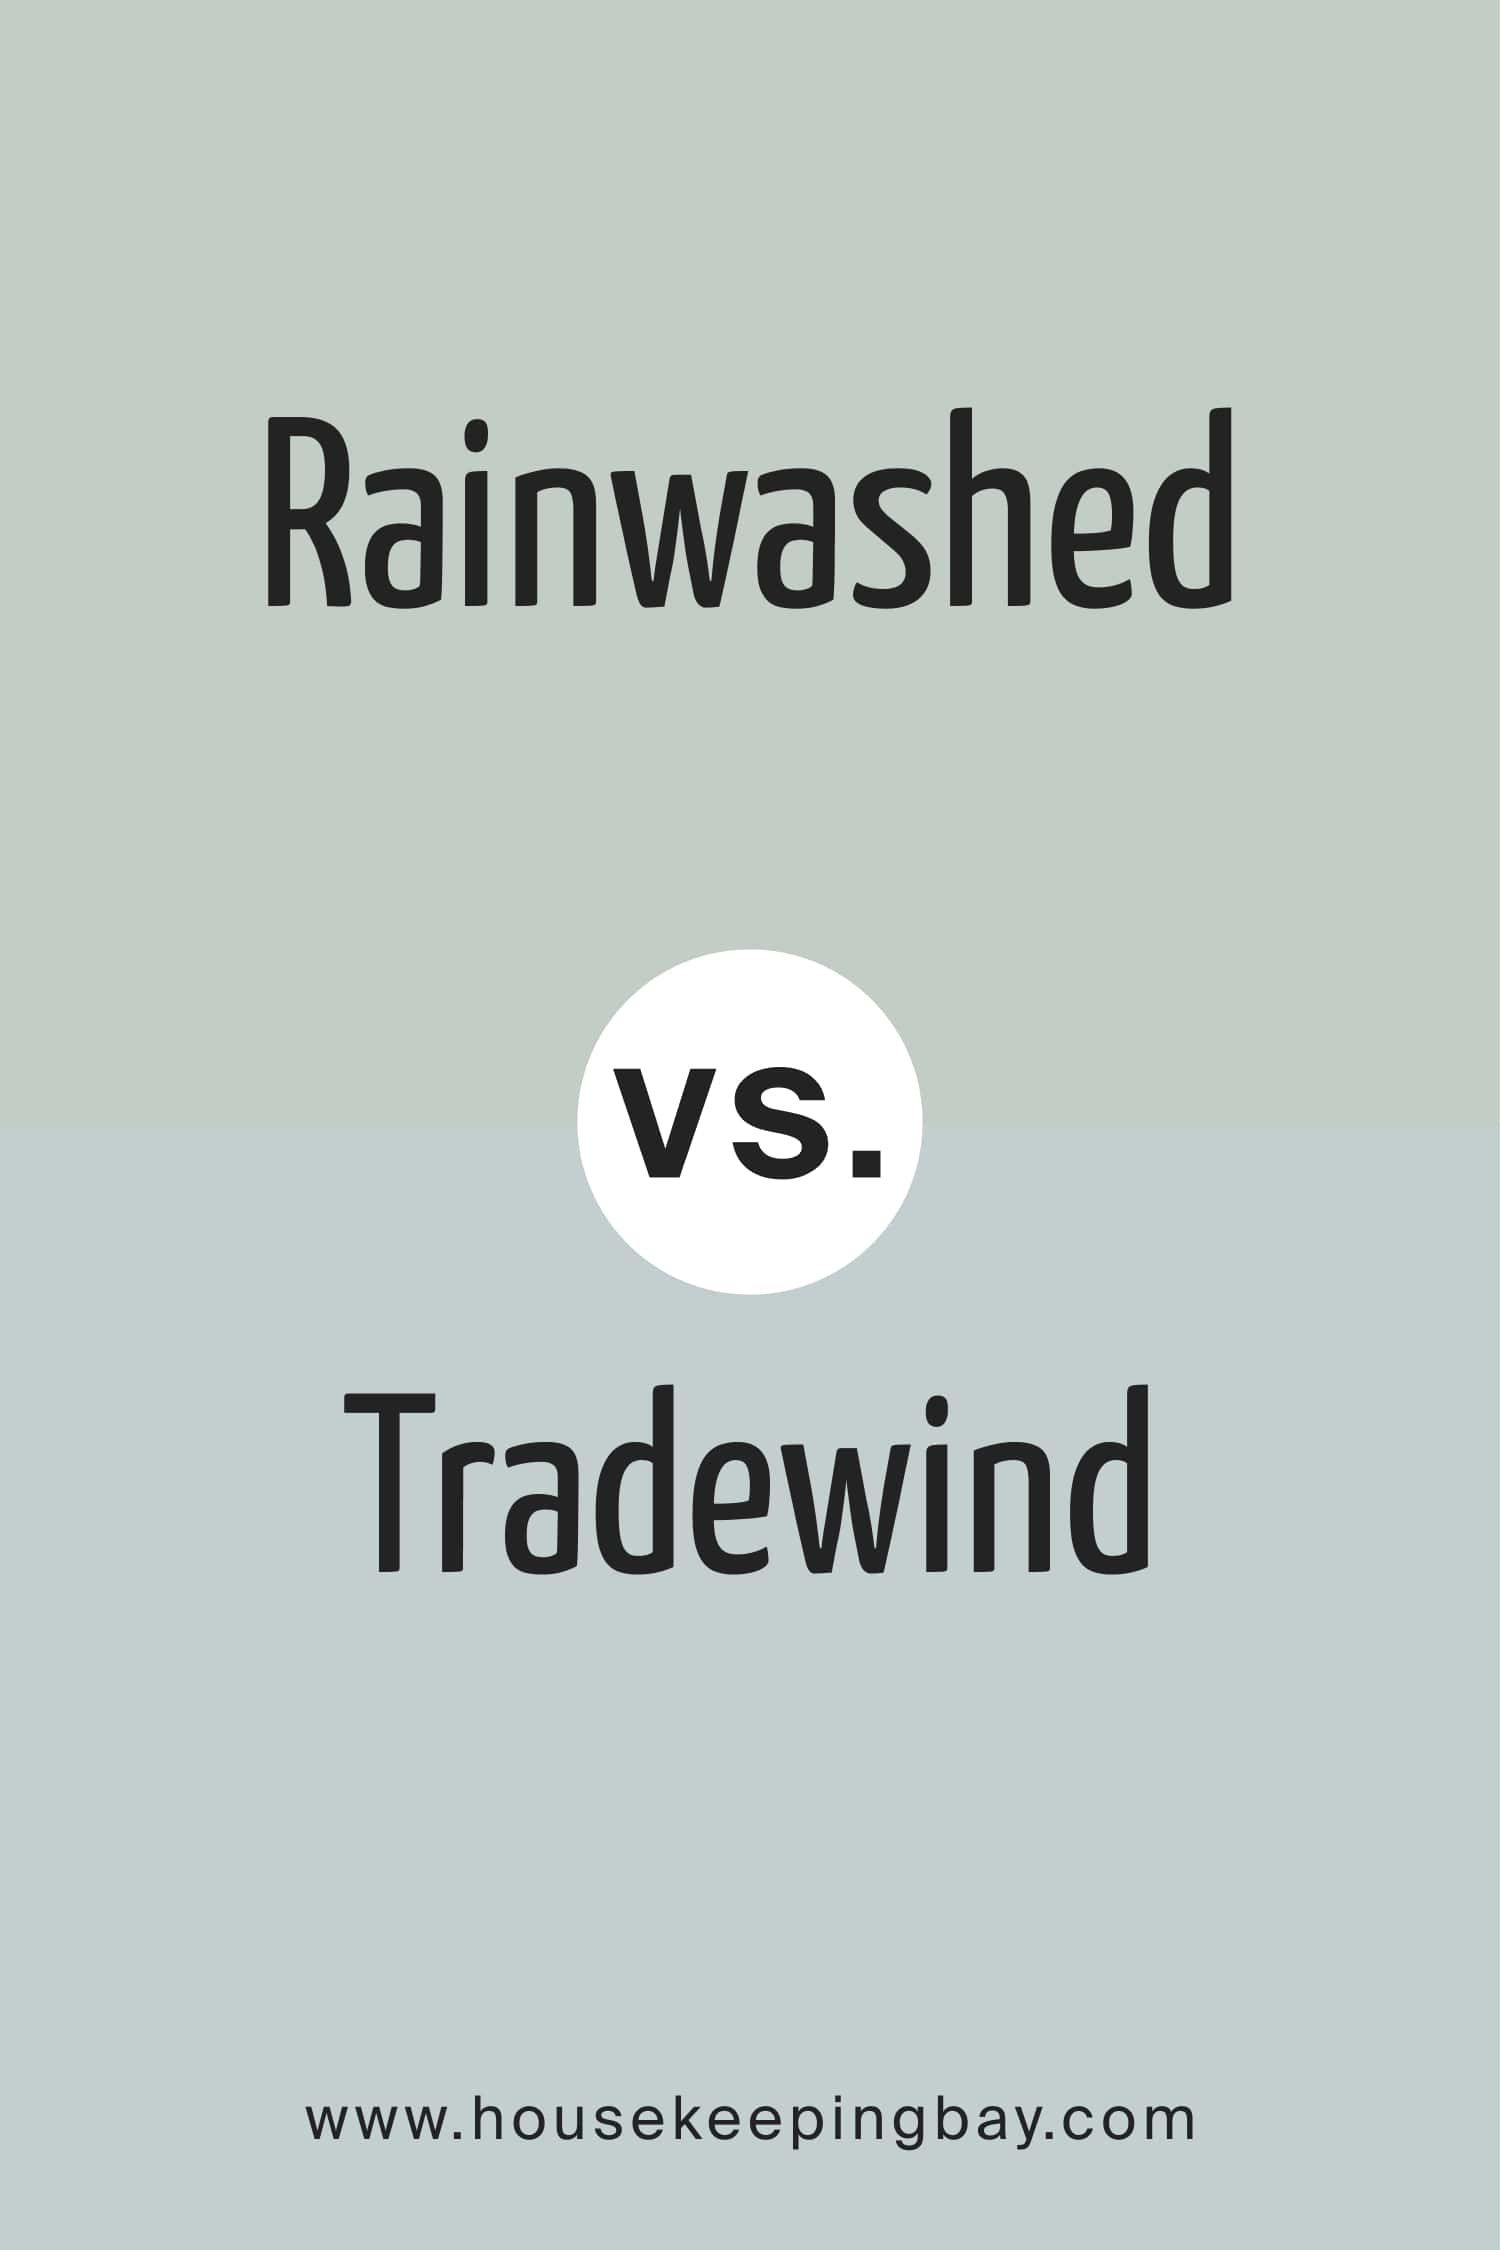 Rainwashed vs Tradewind